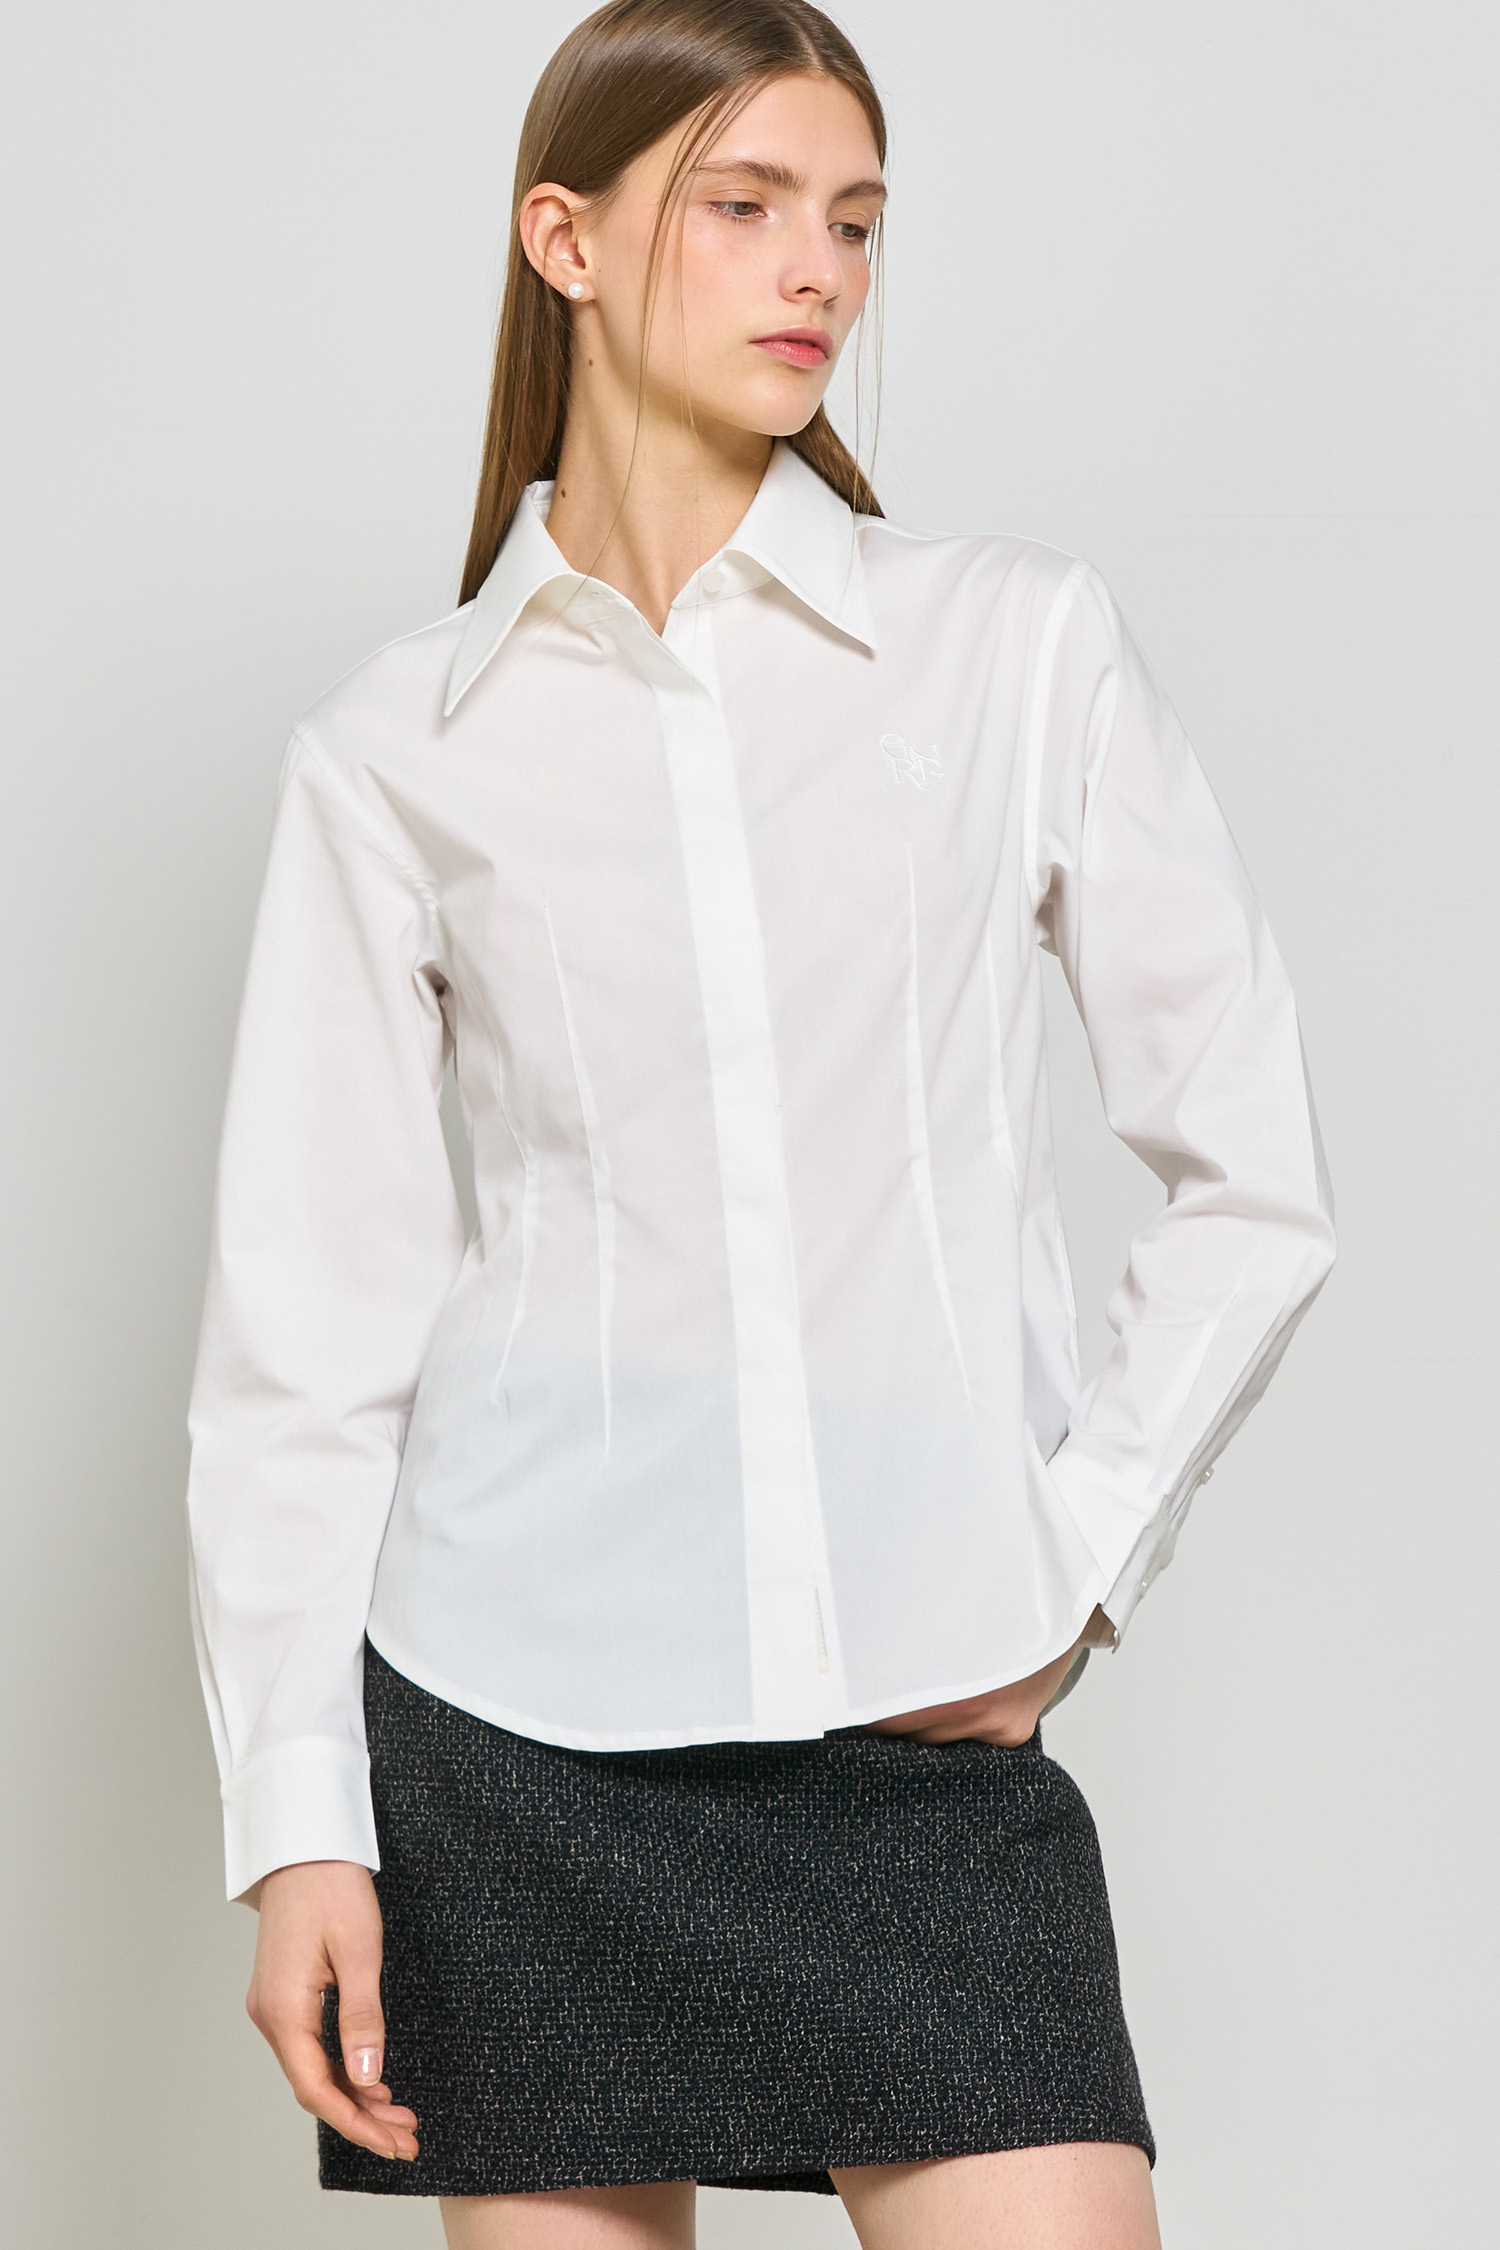 WOMAN 링클프리 페미닌 클래식 셔츠 [WHITE]